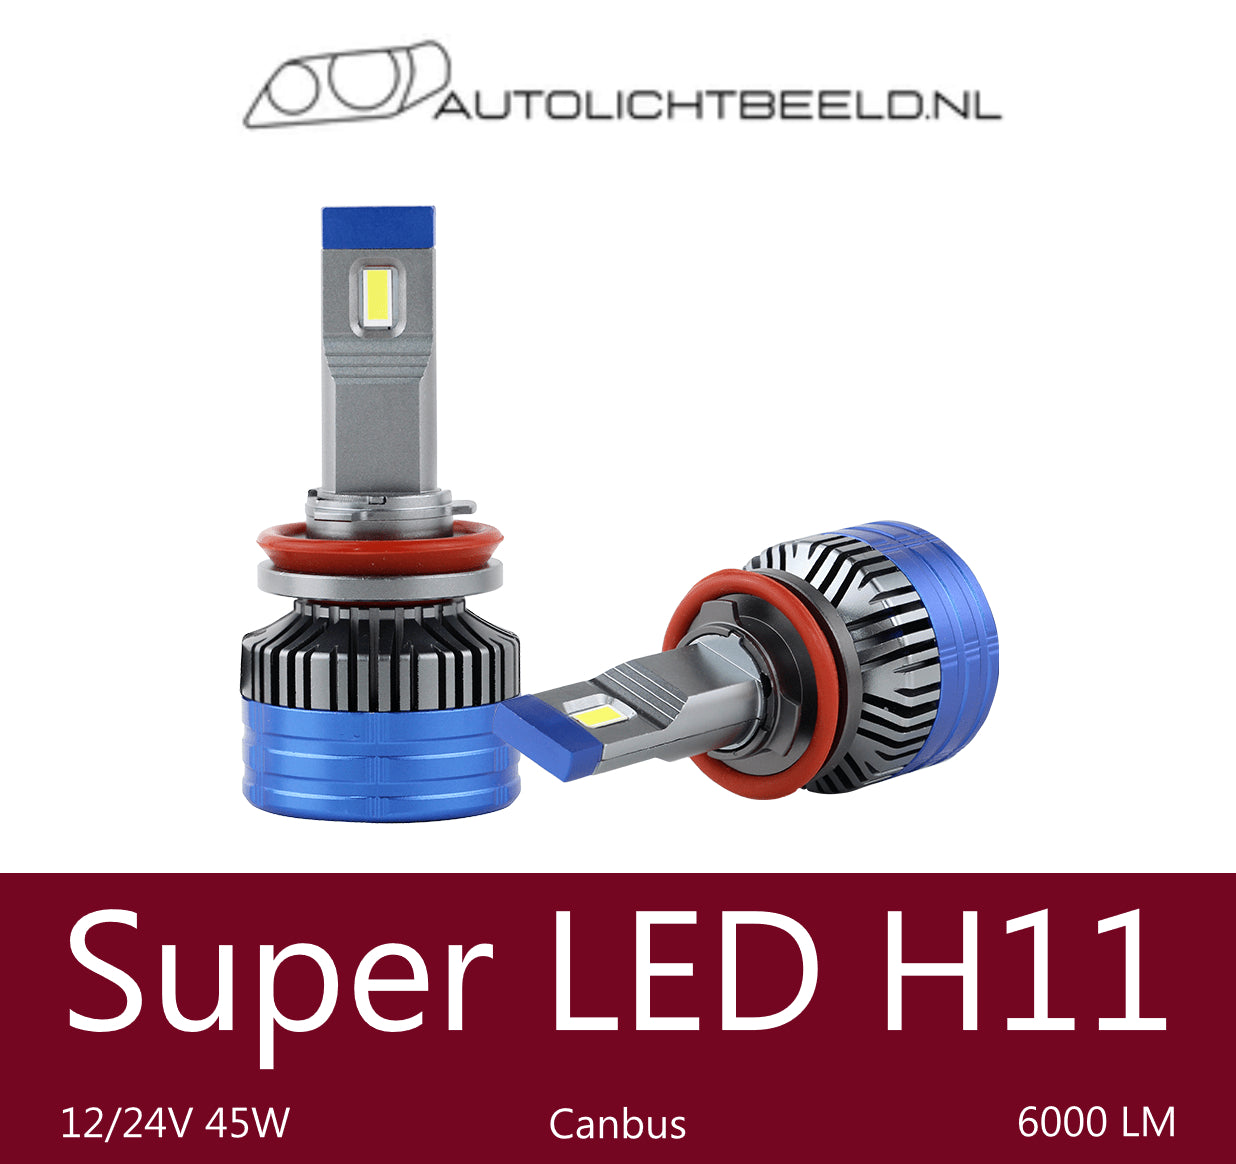 H11 Super LED - Autolichtbeeld